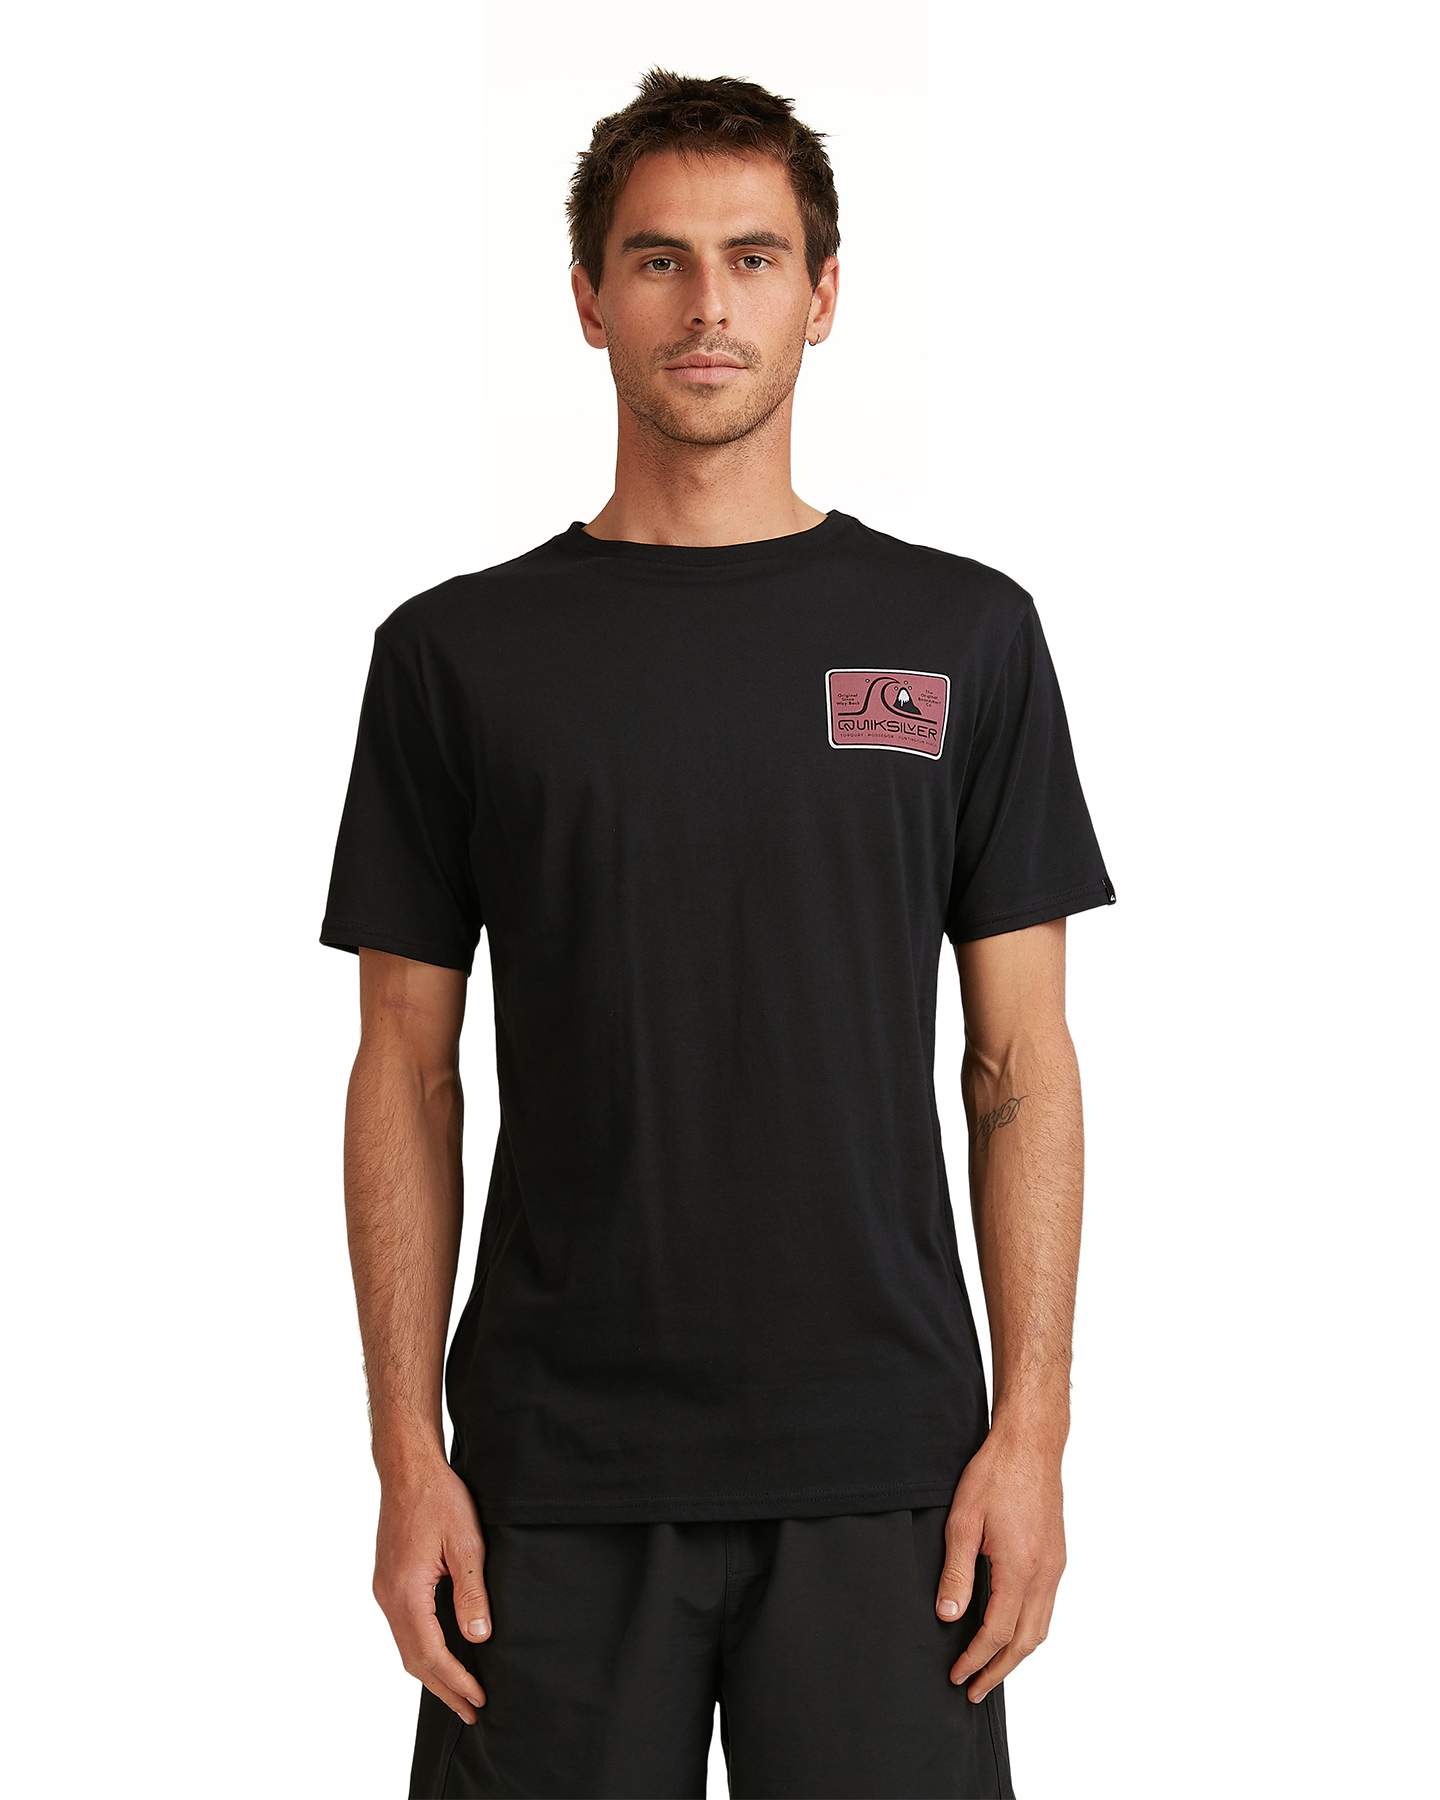 Quiksilver Mens Sea Change T Shirt - Black | SurfStitch